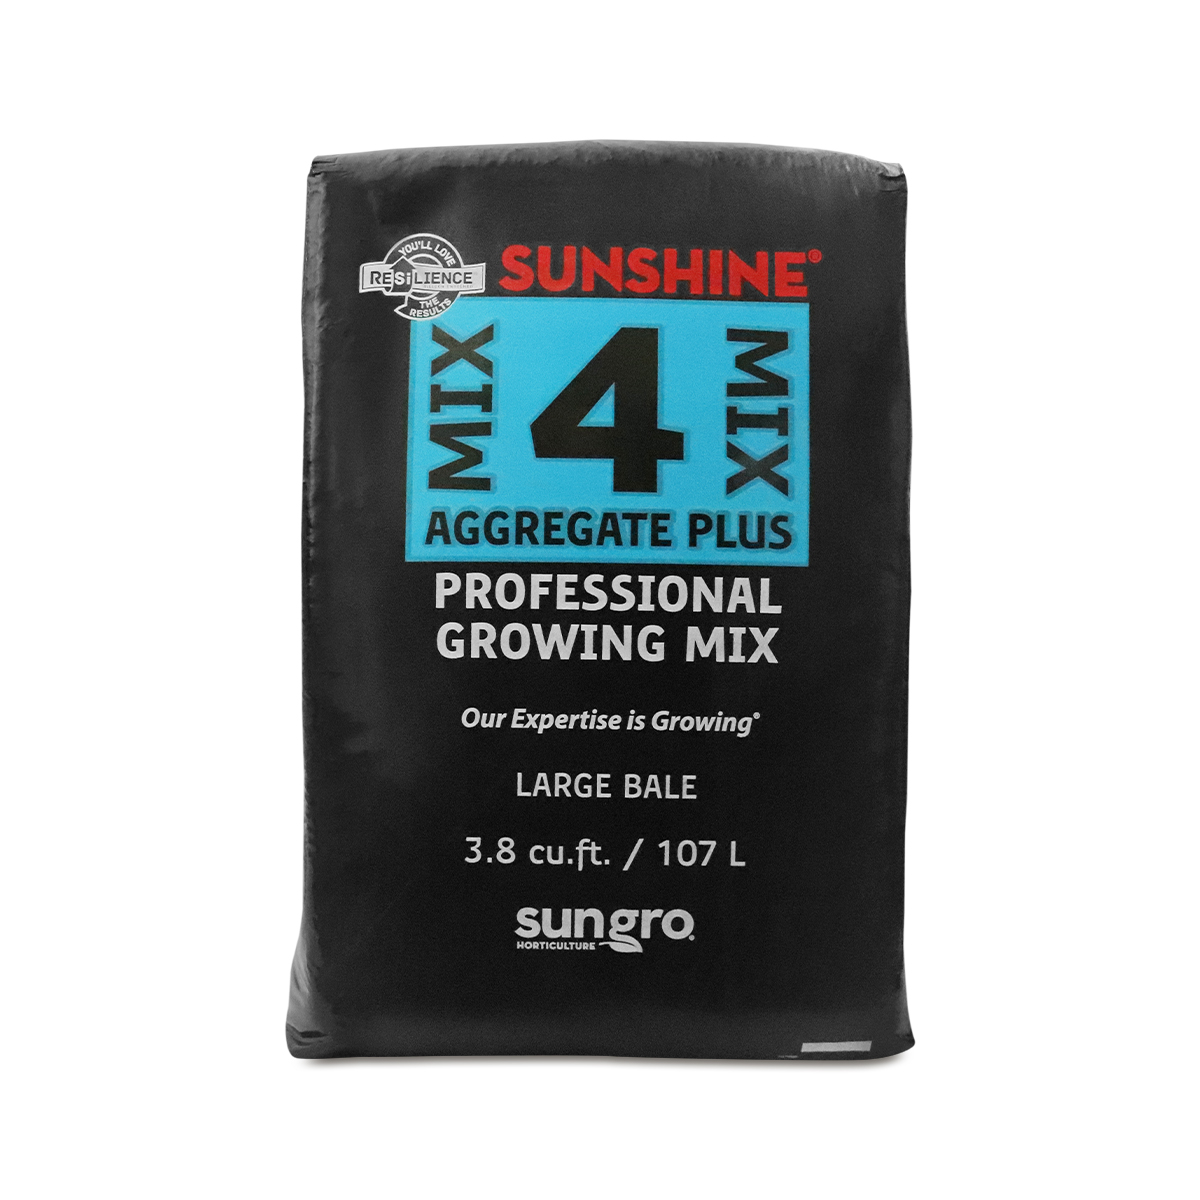 Sungro-Sunshine-4-Aggregate-Plus.jpg